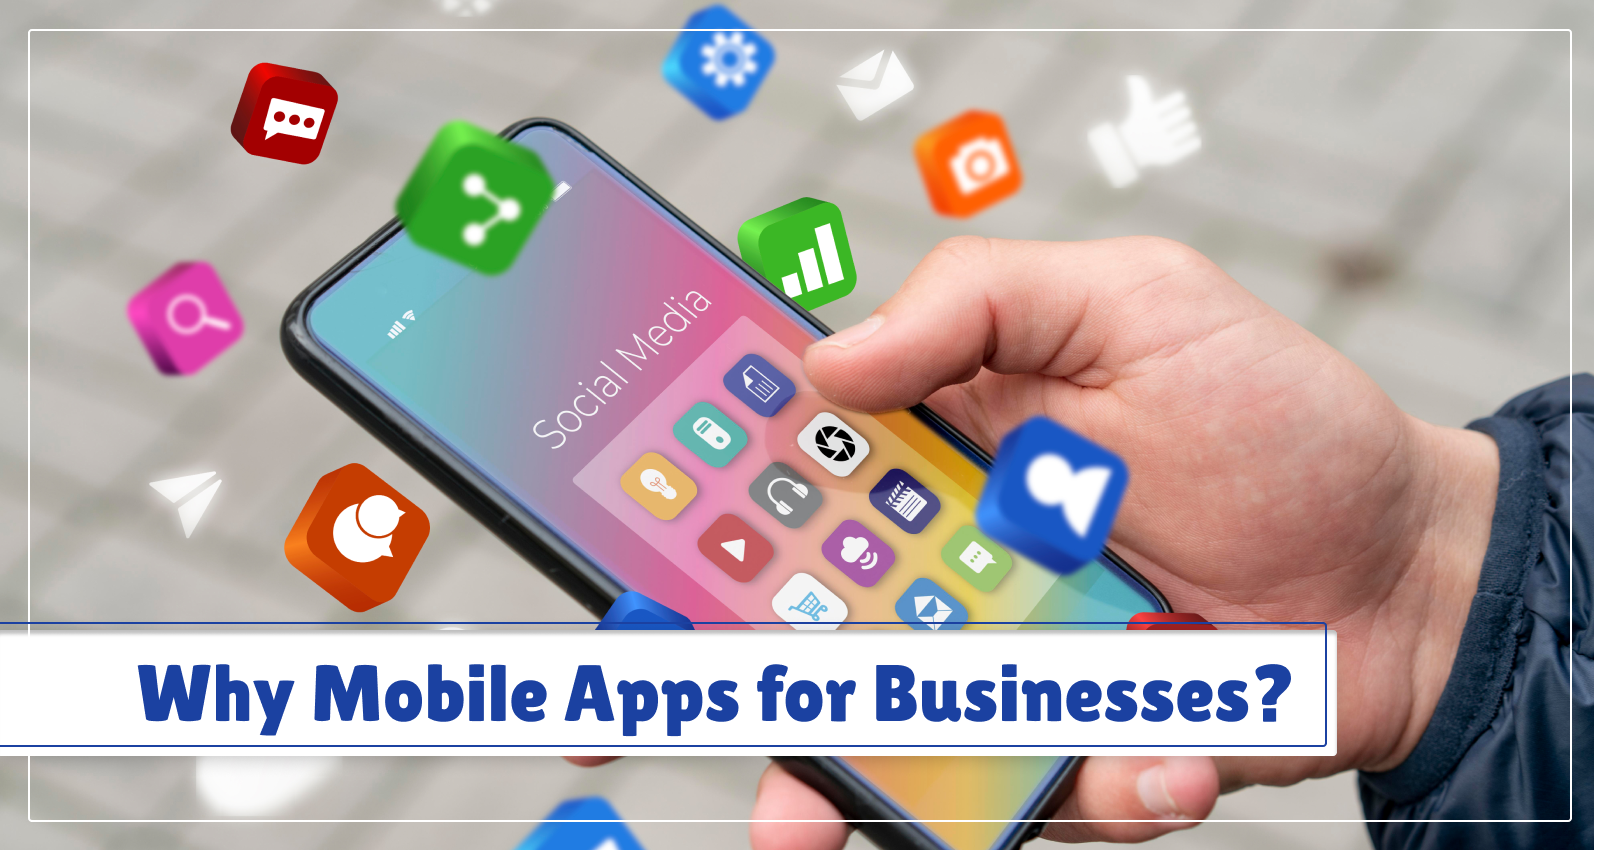 Mobile App Development for Businesses, App Development, App development services, Mobile App development companies